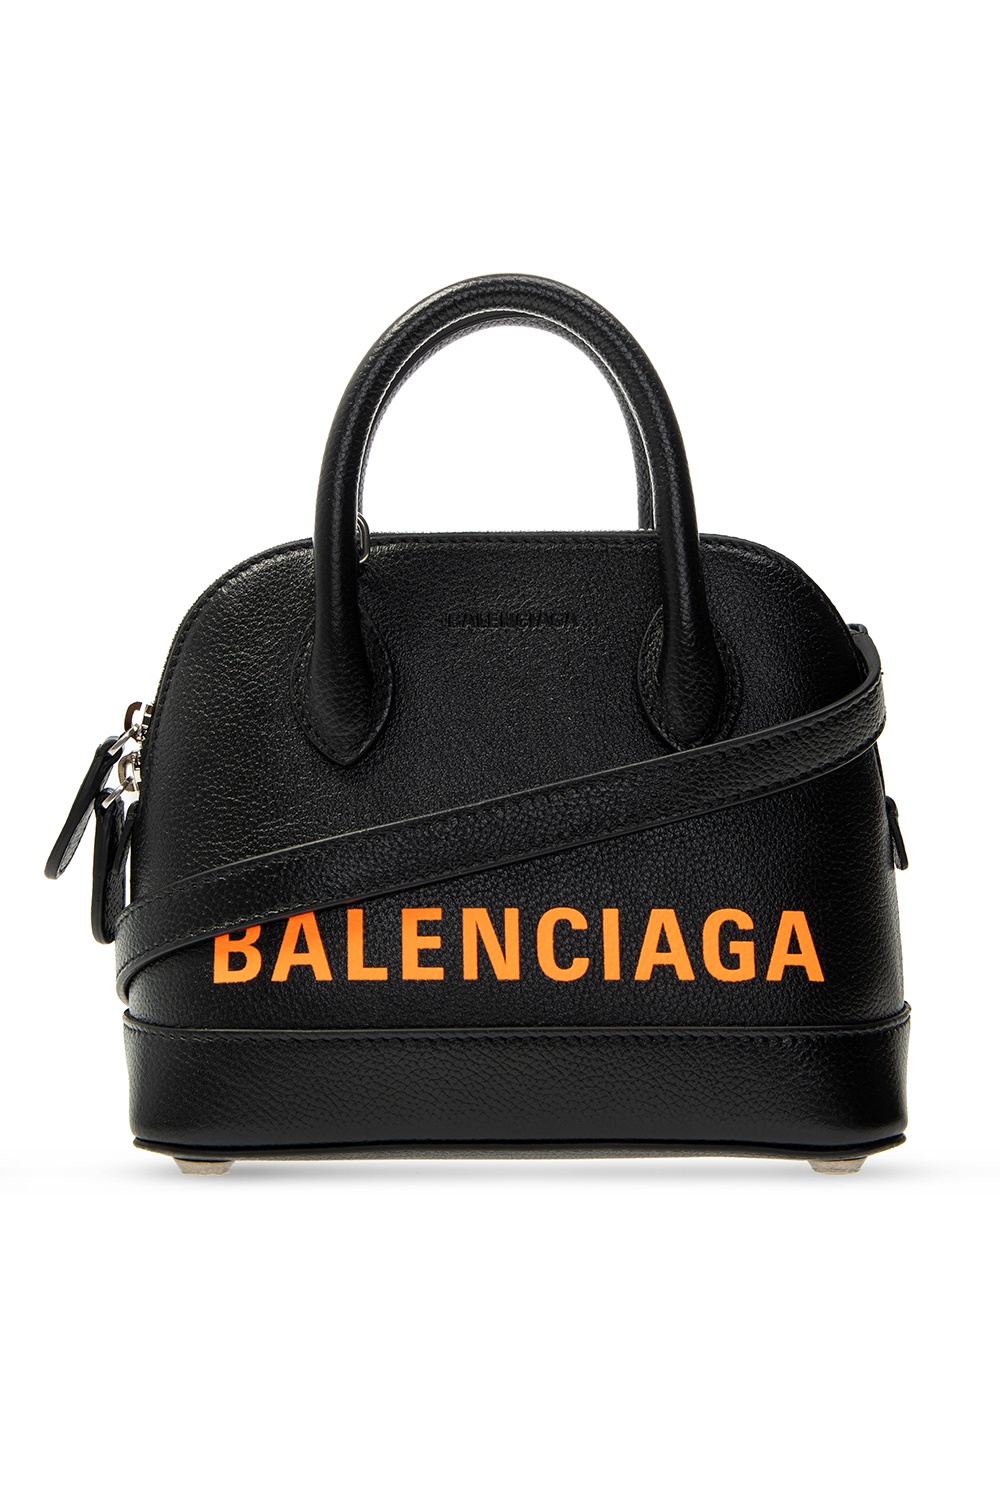 PreOrder Balenciaga Hourglass S bag  Shopee Singapore